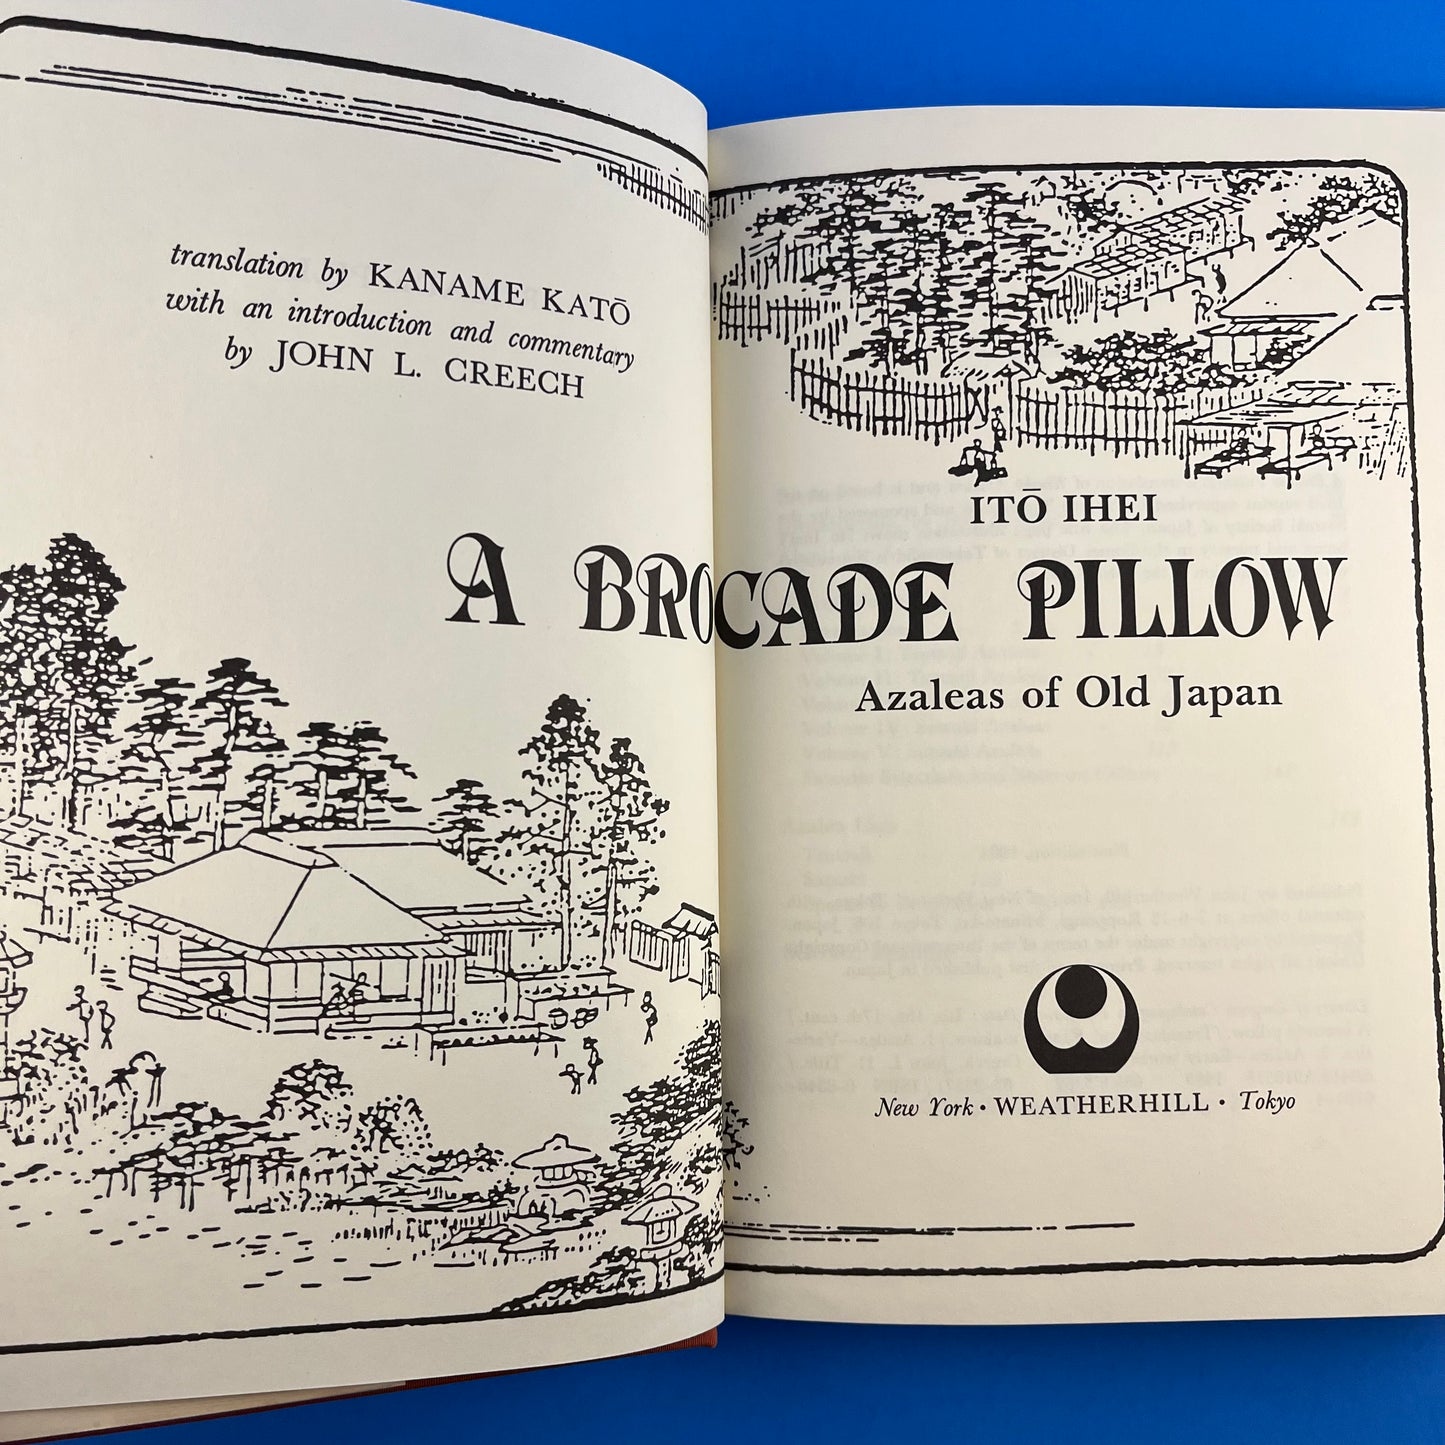 A Brocade Pillow: Azaleas of Old Japan